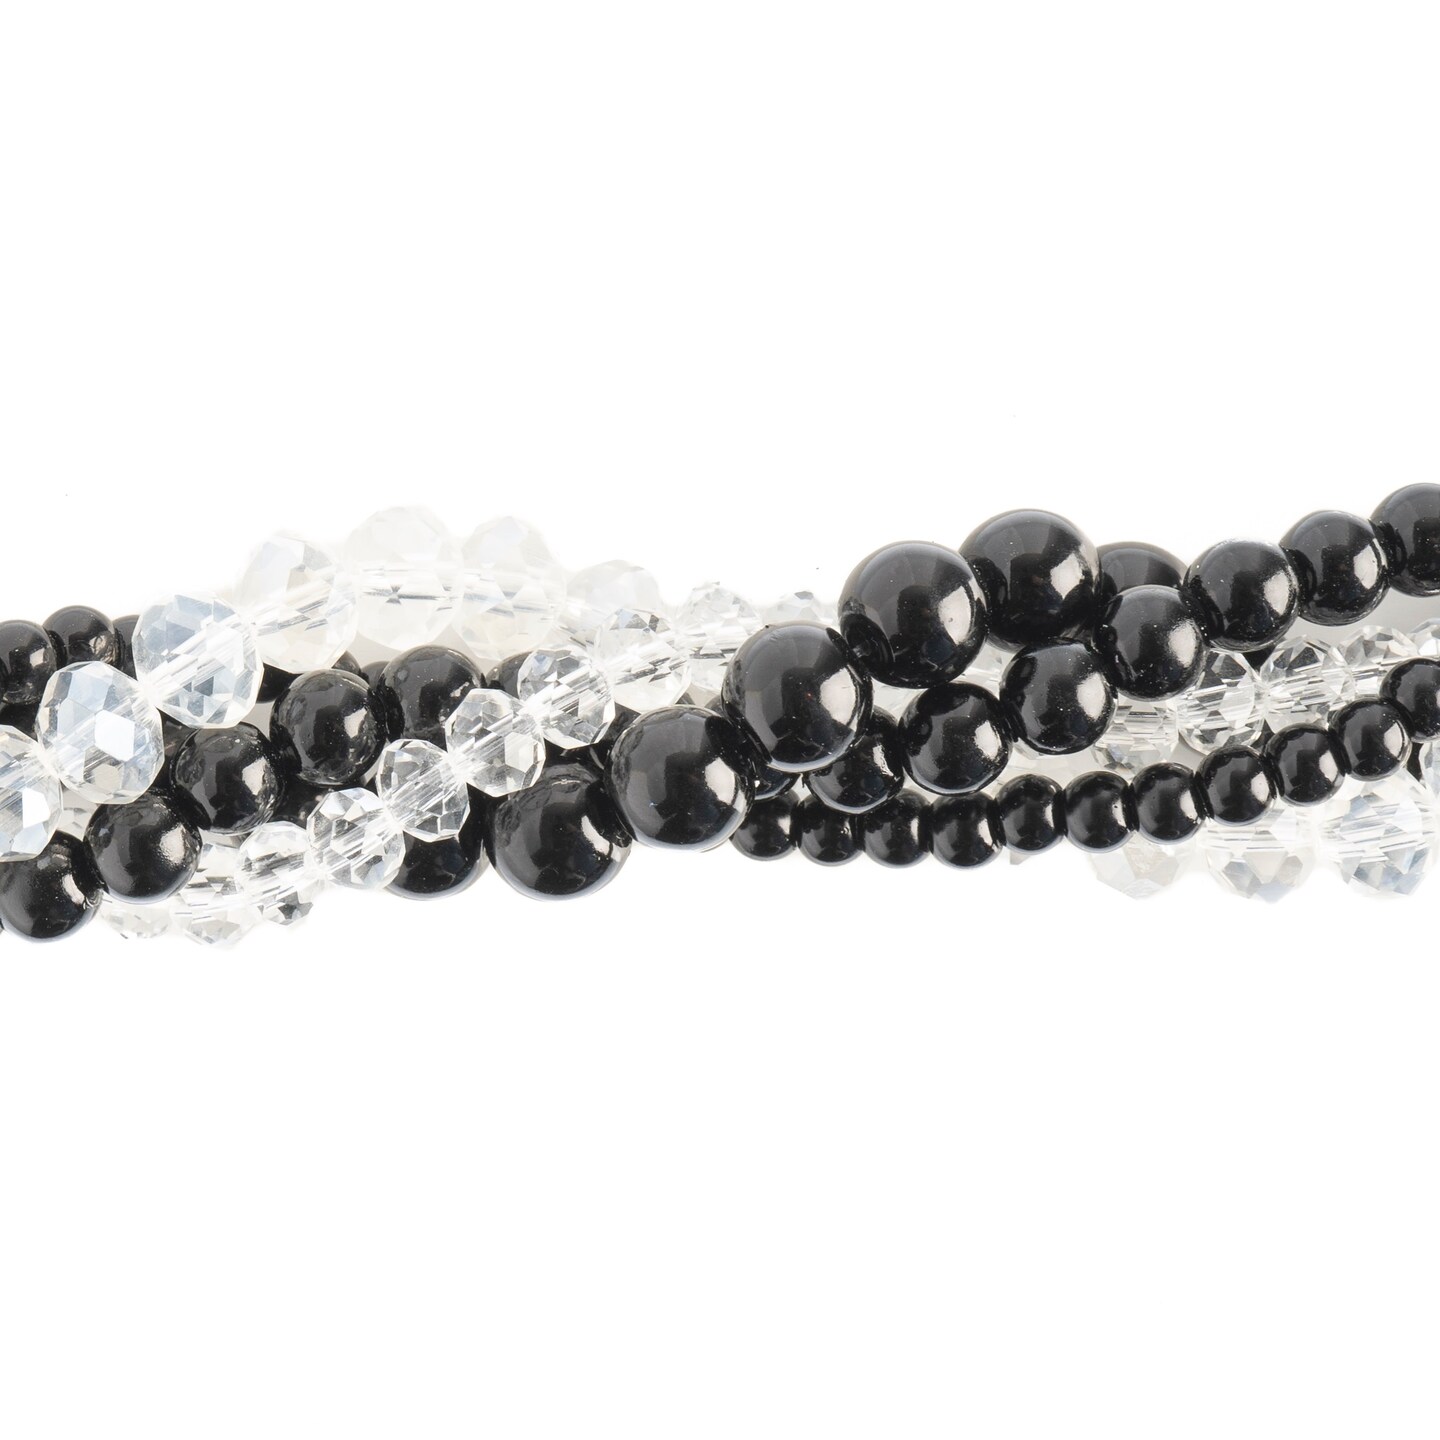 Crystal Lane DIY Black Dalia Twisted Glass &#x26; Pearls Beads, 5 Strands